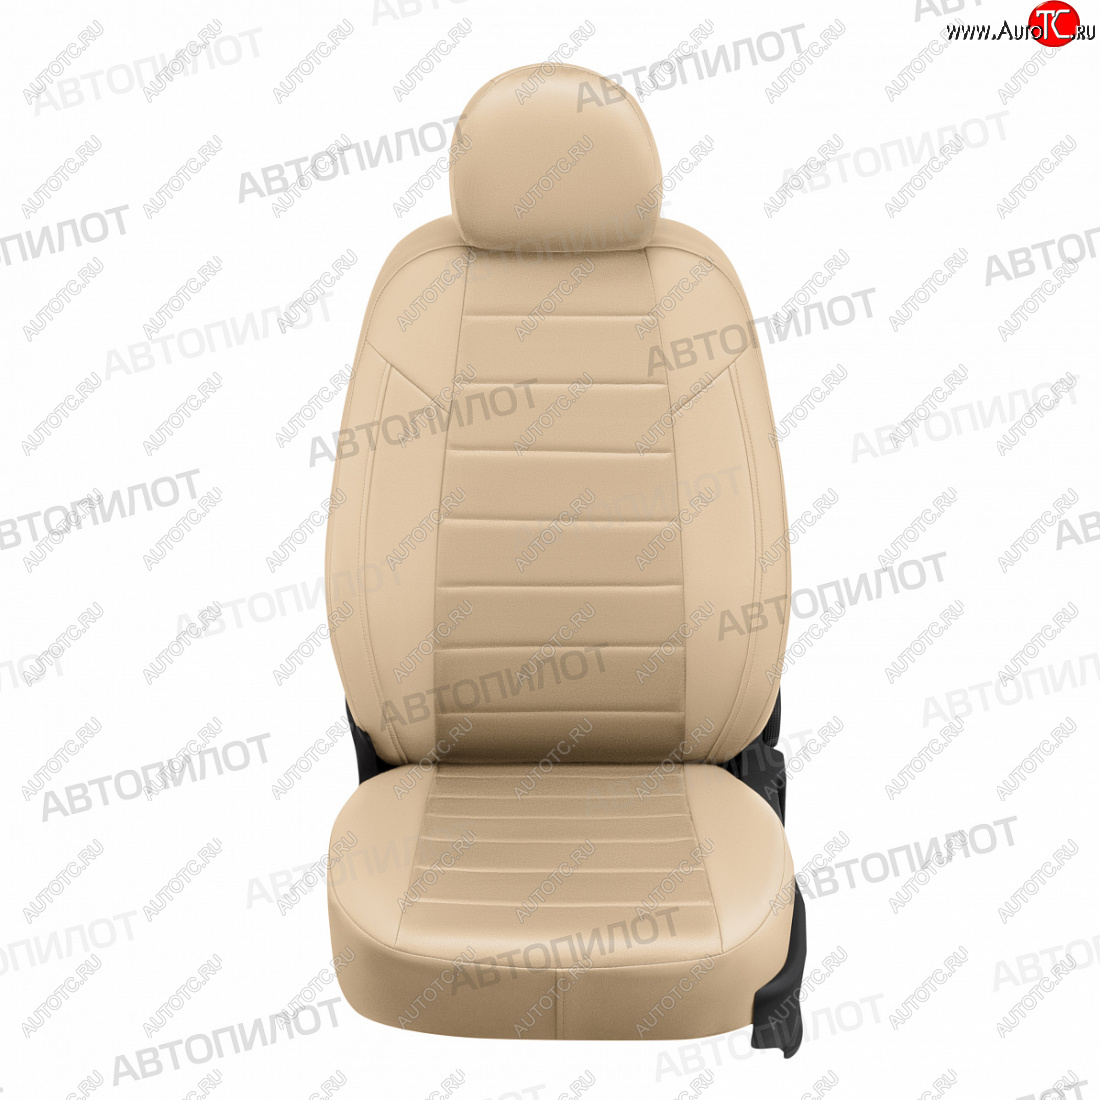 13 849 р. Чехлы сидений (экокожа/алькантара, GT Line) Автопилот KIA Cerato 4 BD рестайлинг седан (2021-2024) (бежевый)